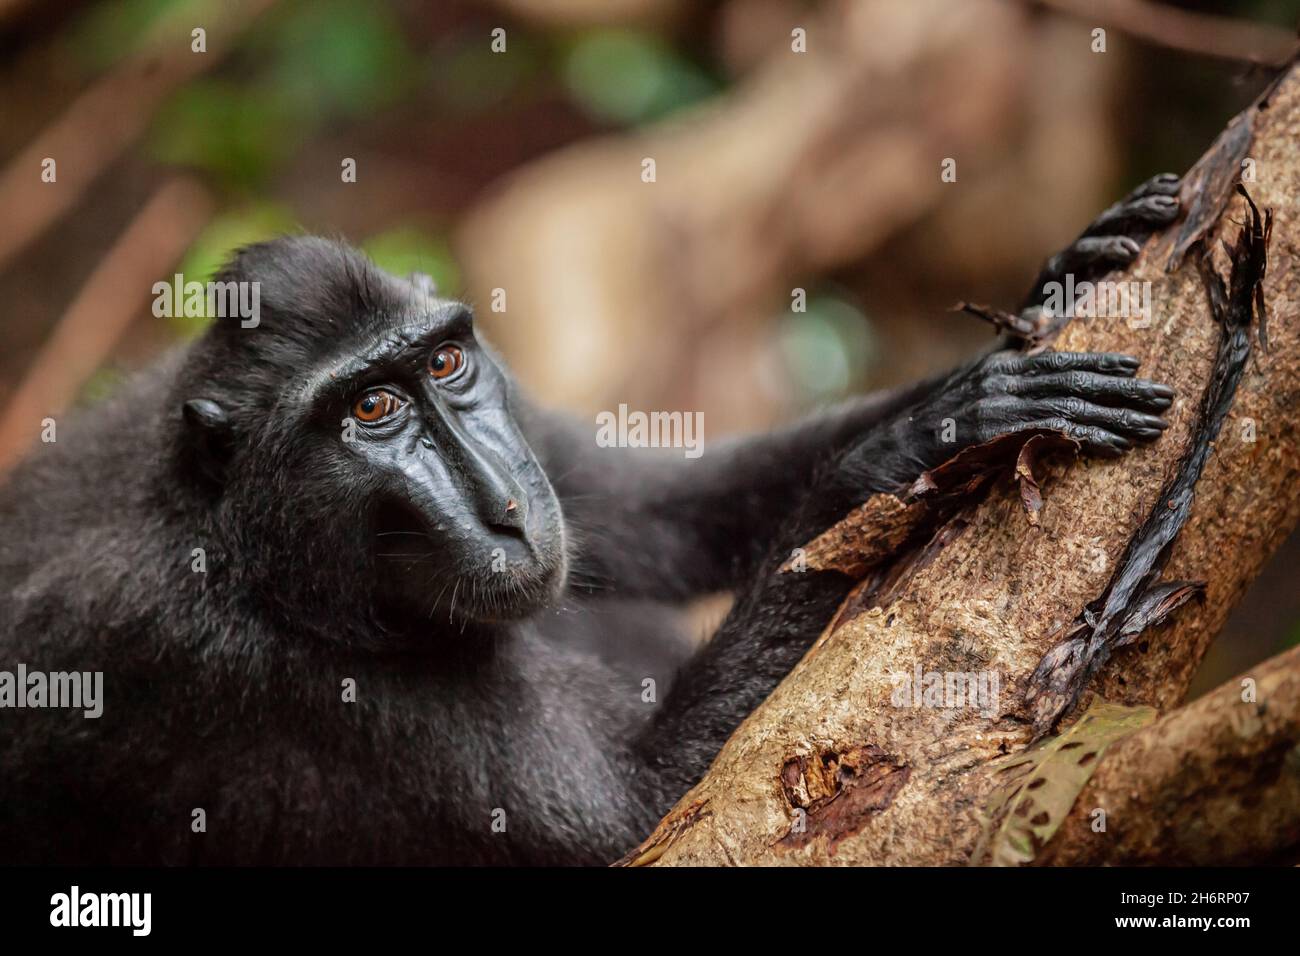 Crested Black Macaque in seinem tropischen Waldhabitat, Tangkoko National Park, Indonesien Stockfoto